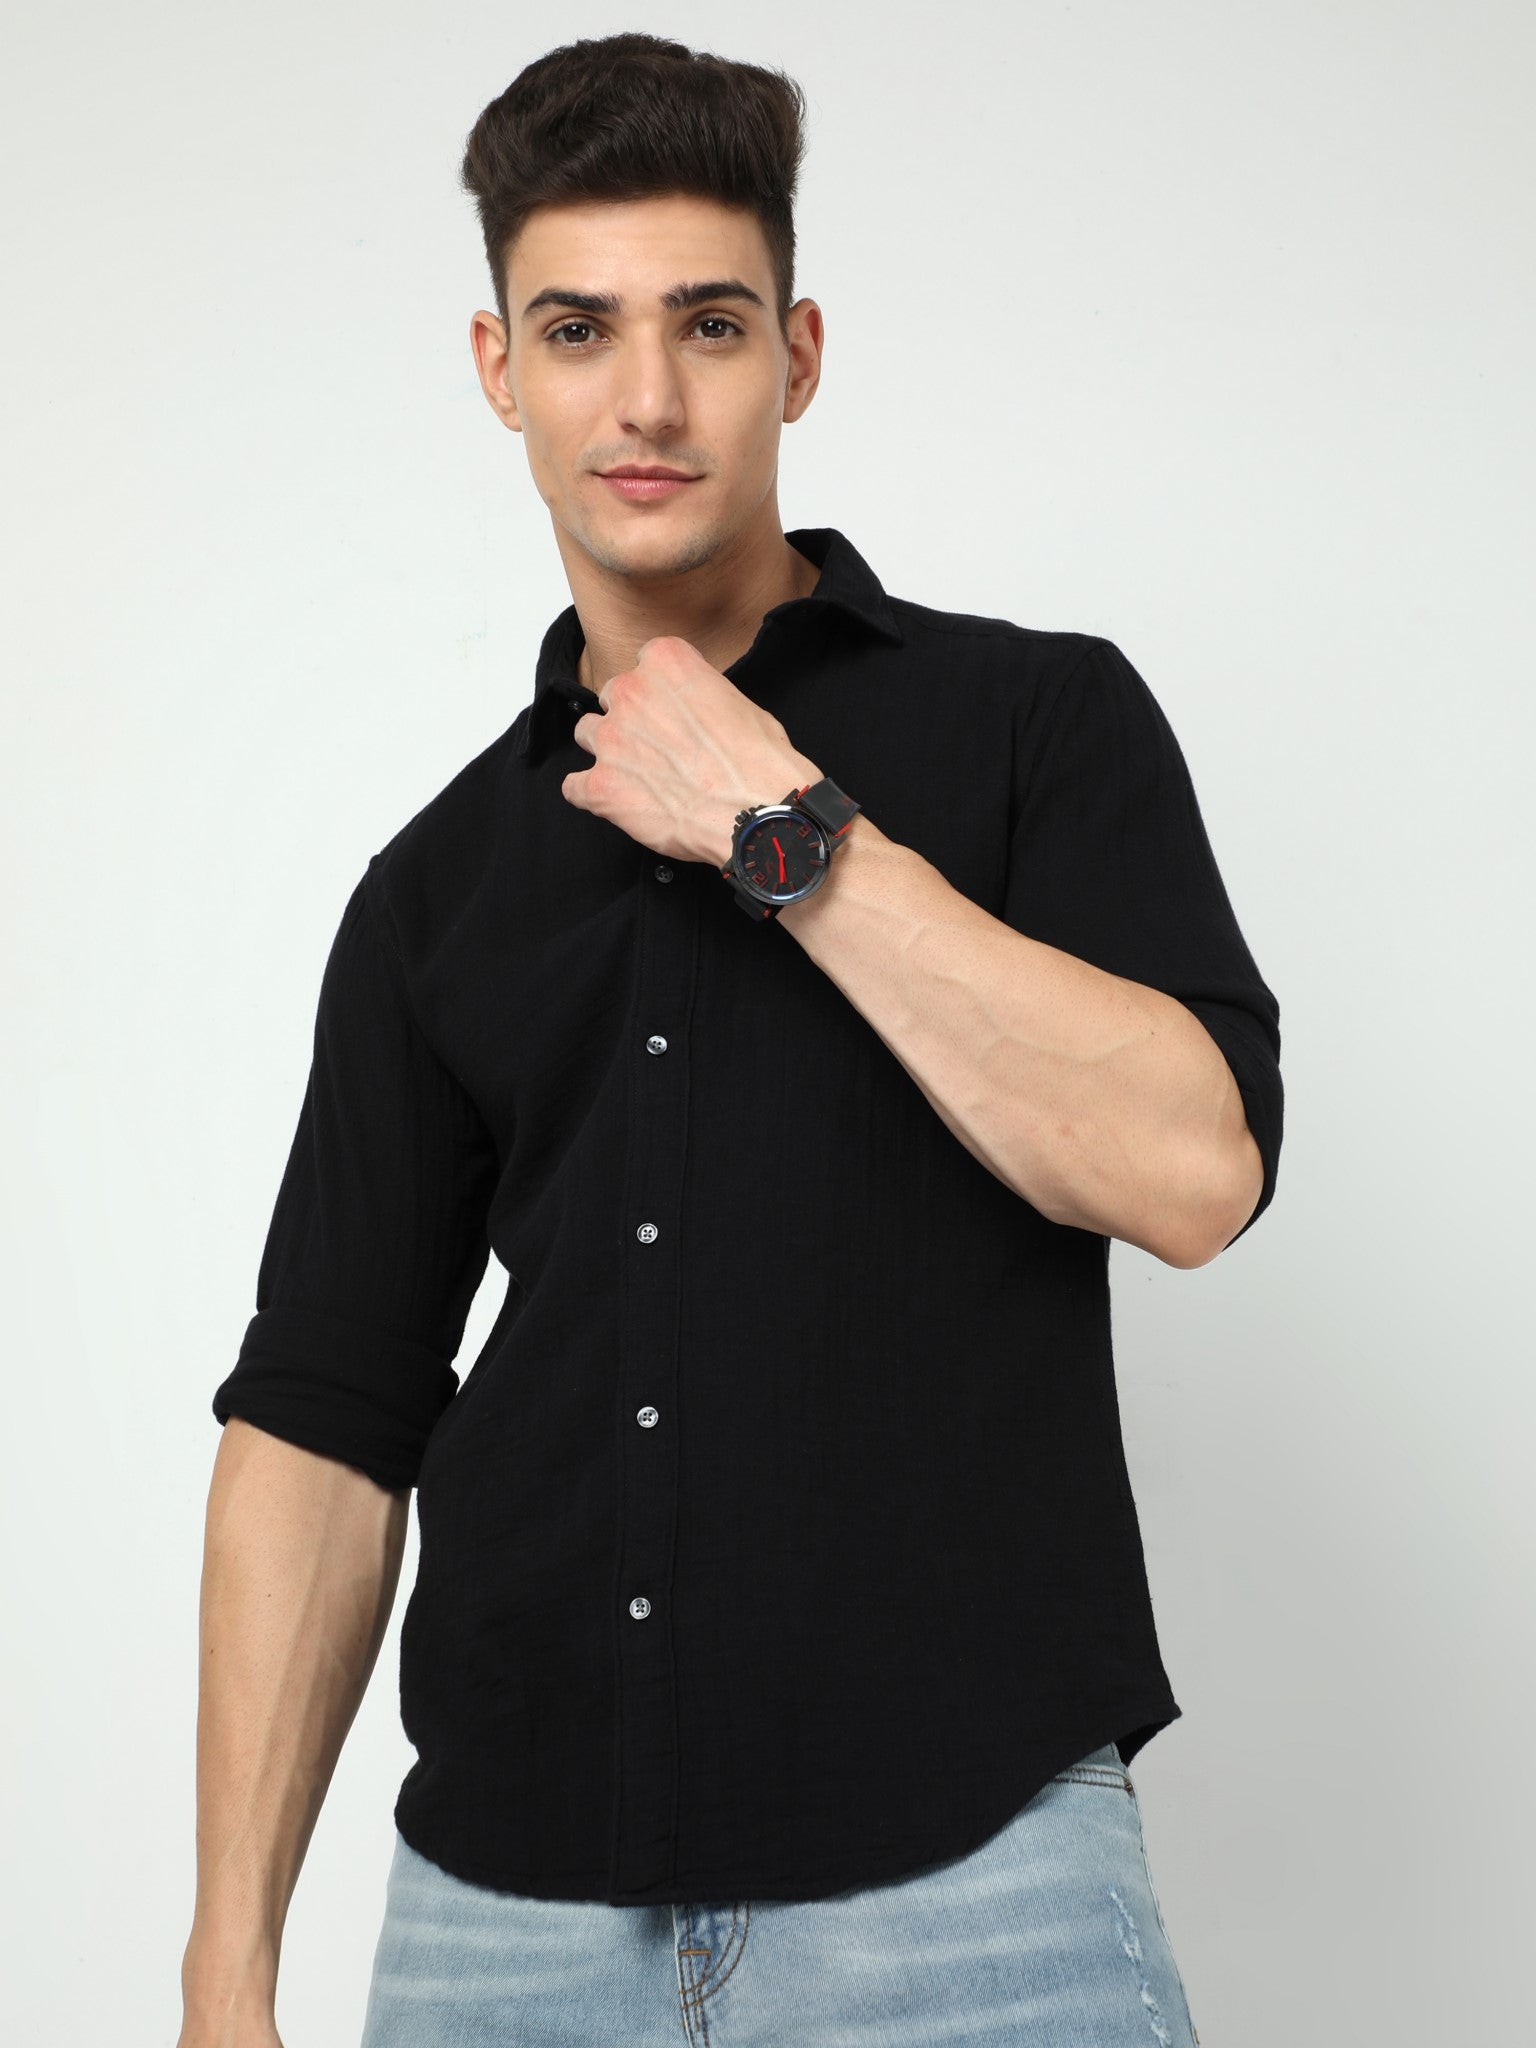 Plain Black Shirt - Buy Plain Black Shirt online in India